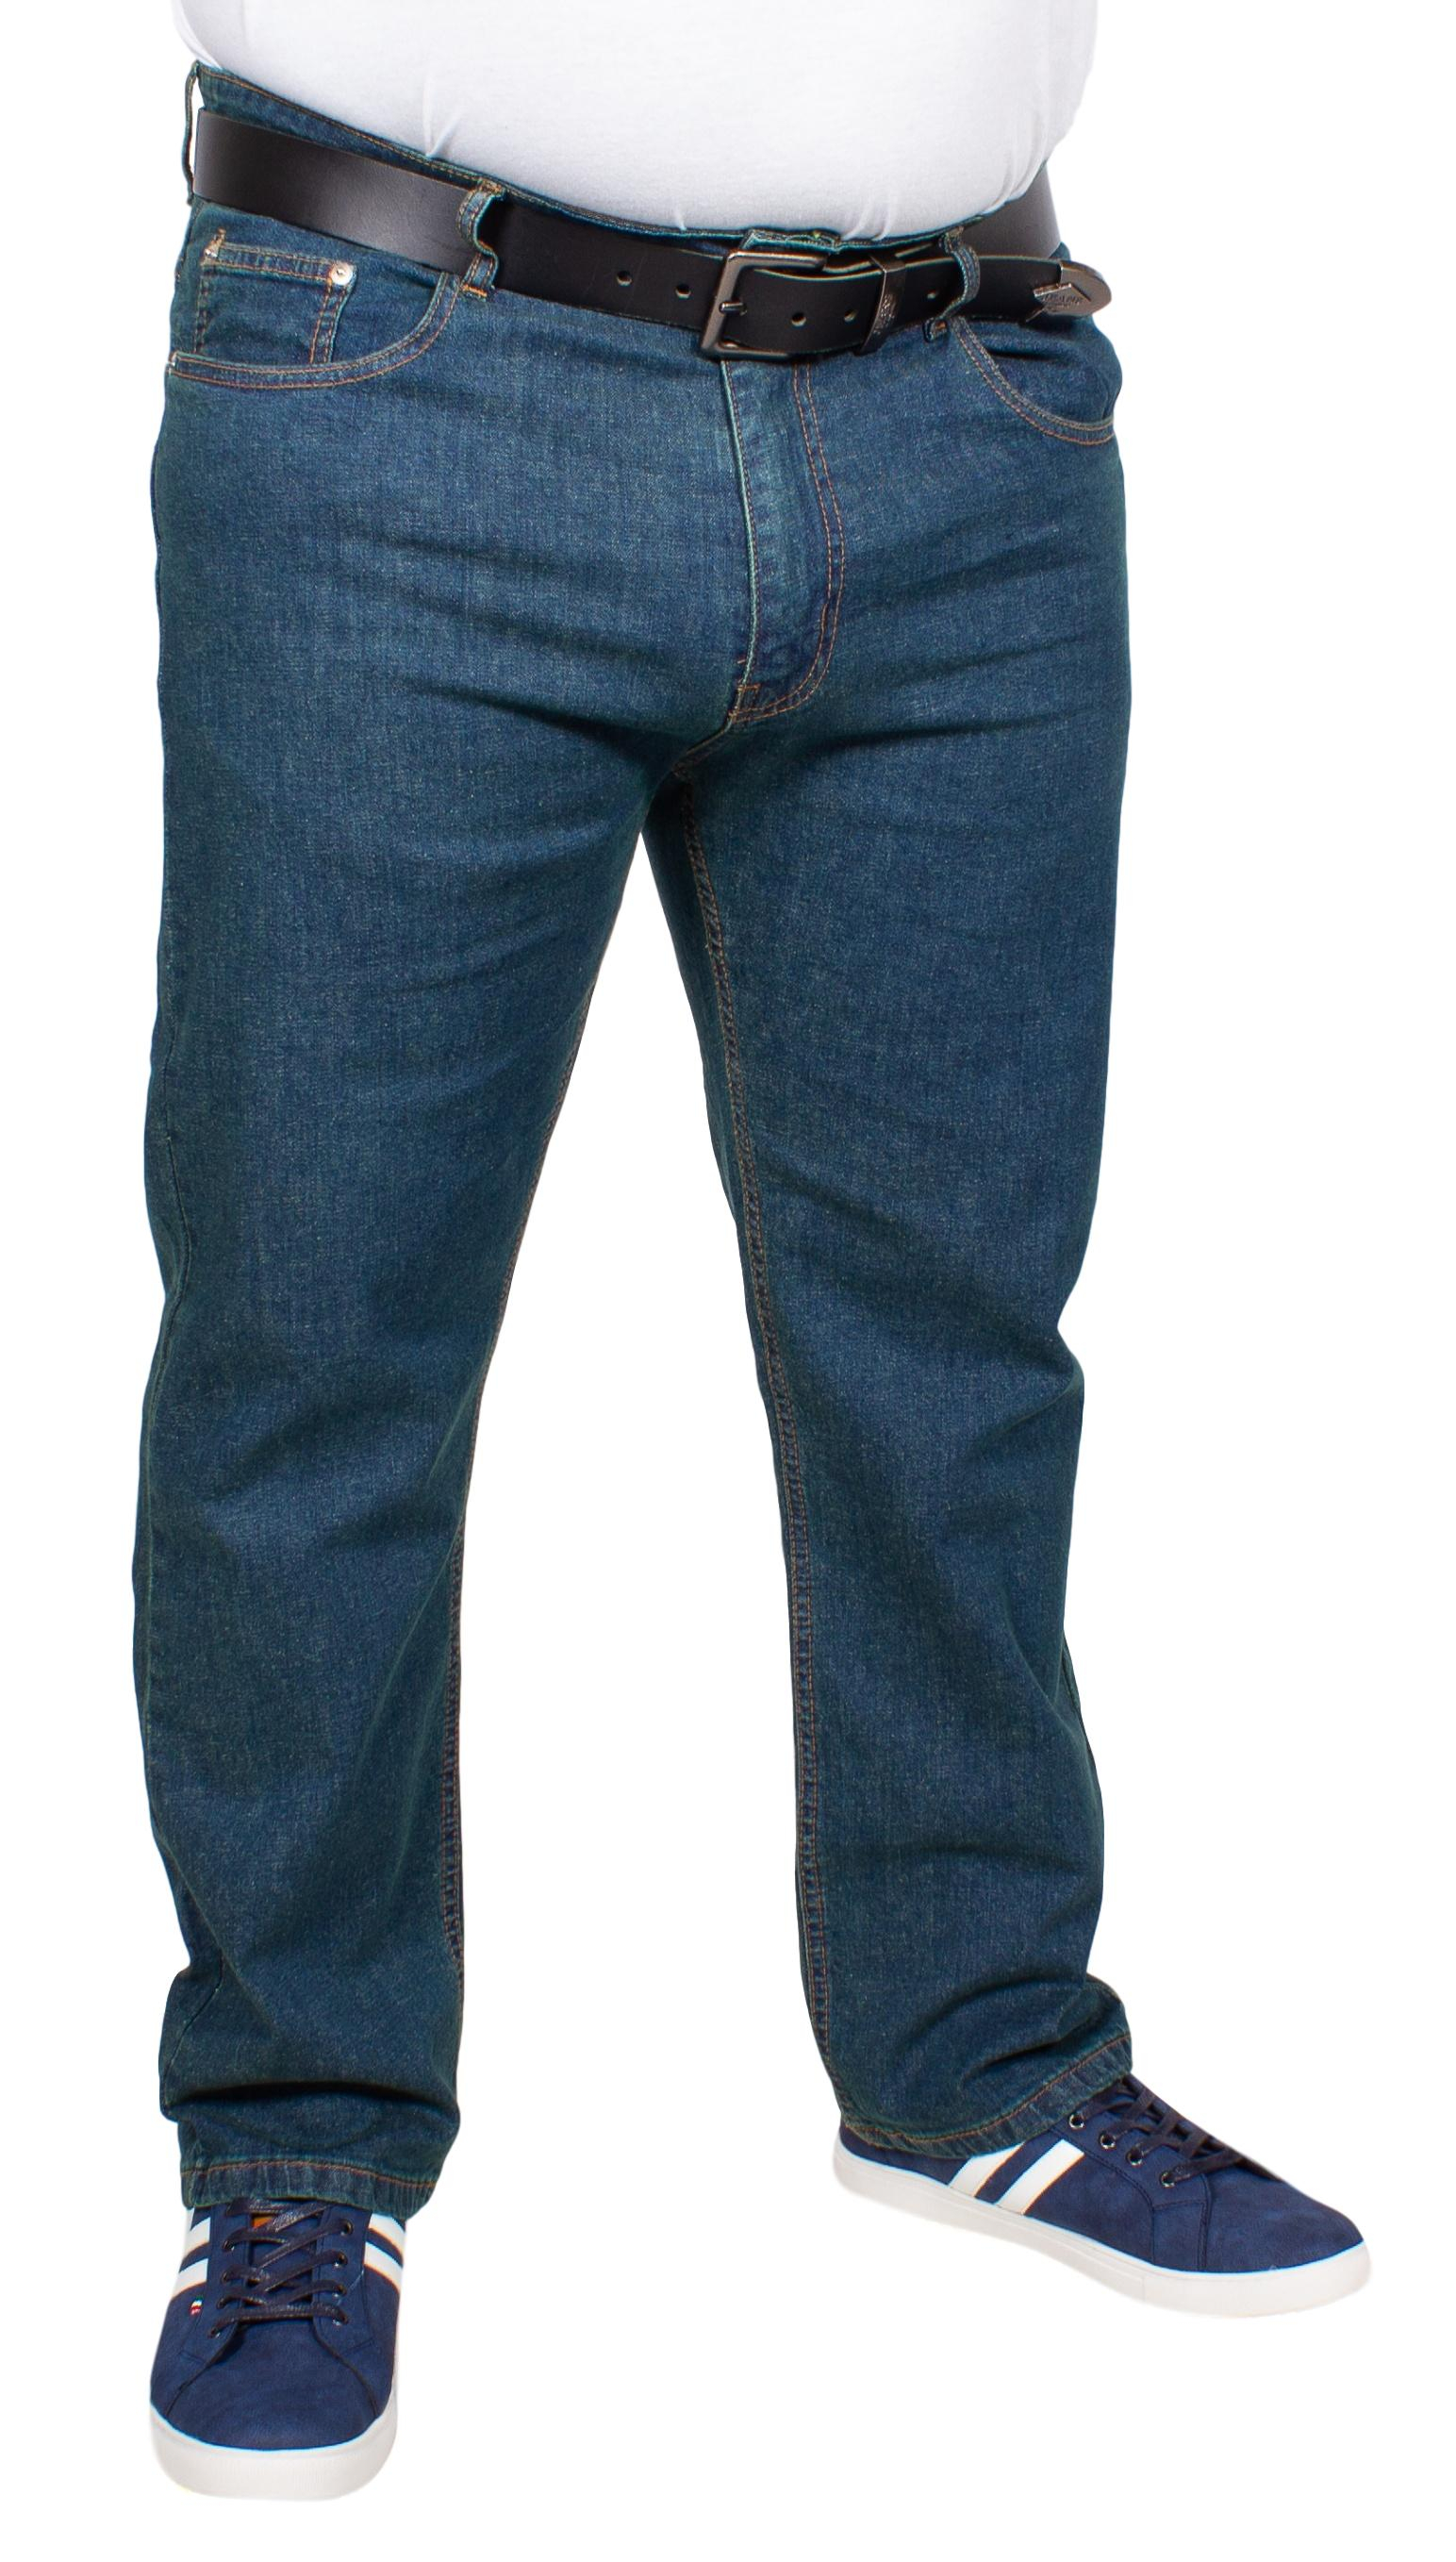 size 54 mens jeans